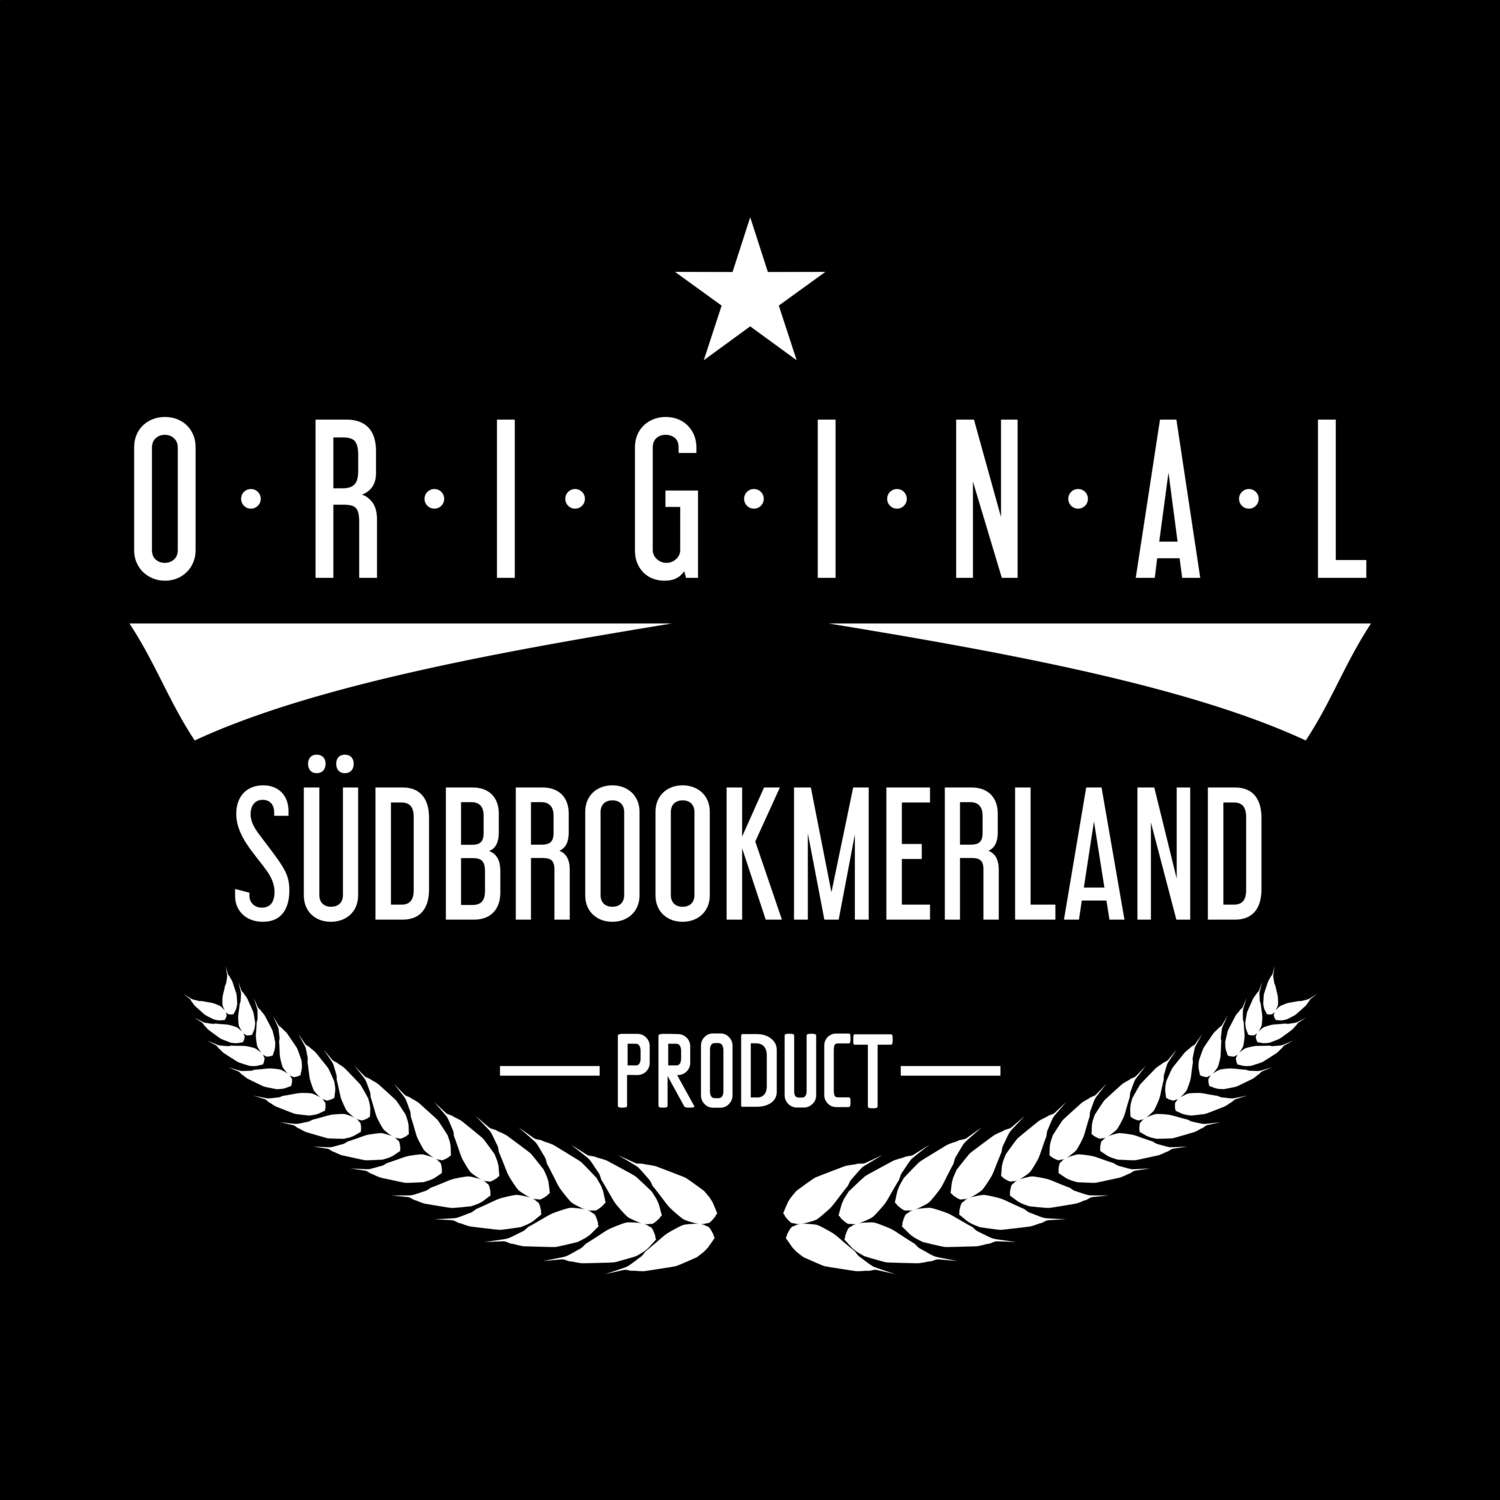 Südbrookmerland T-Shirt »Original Product«